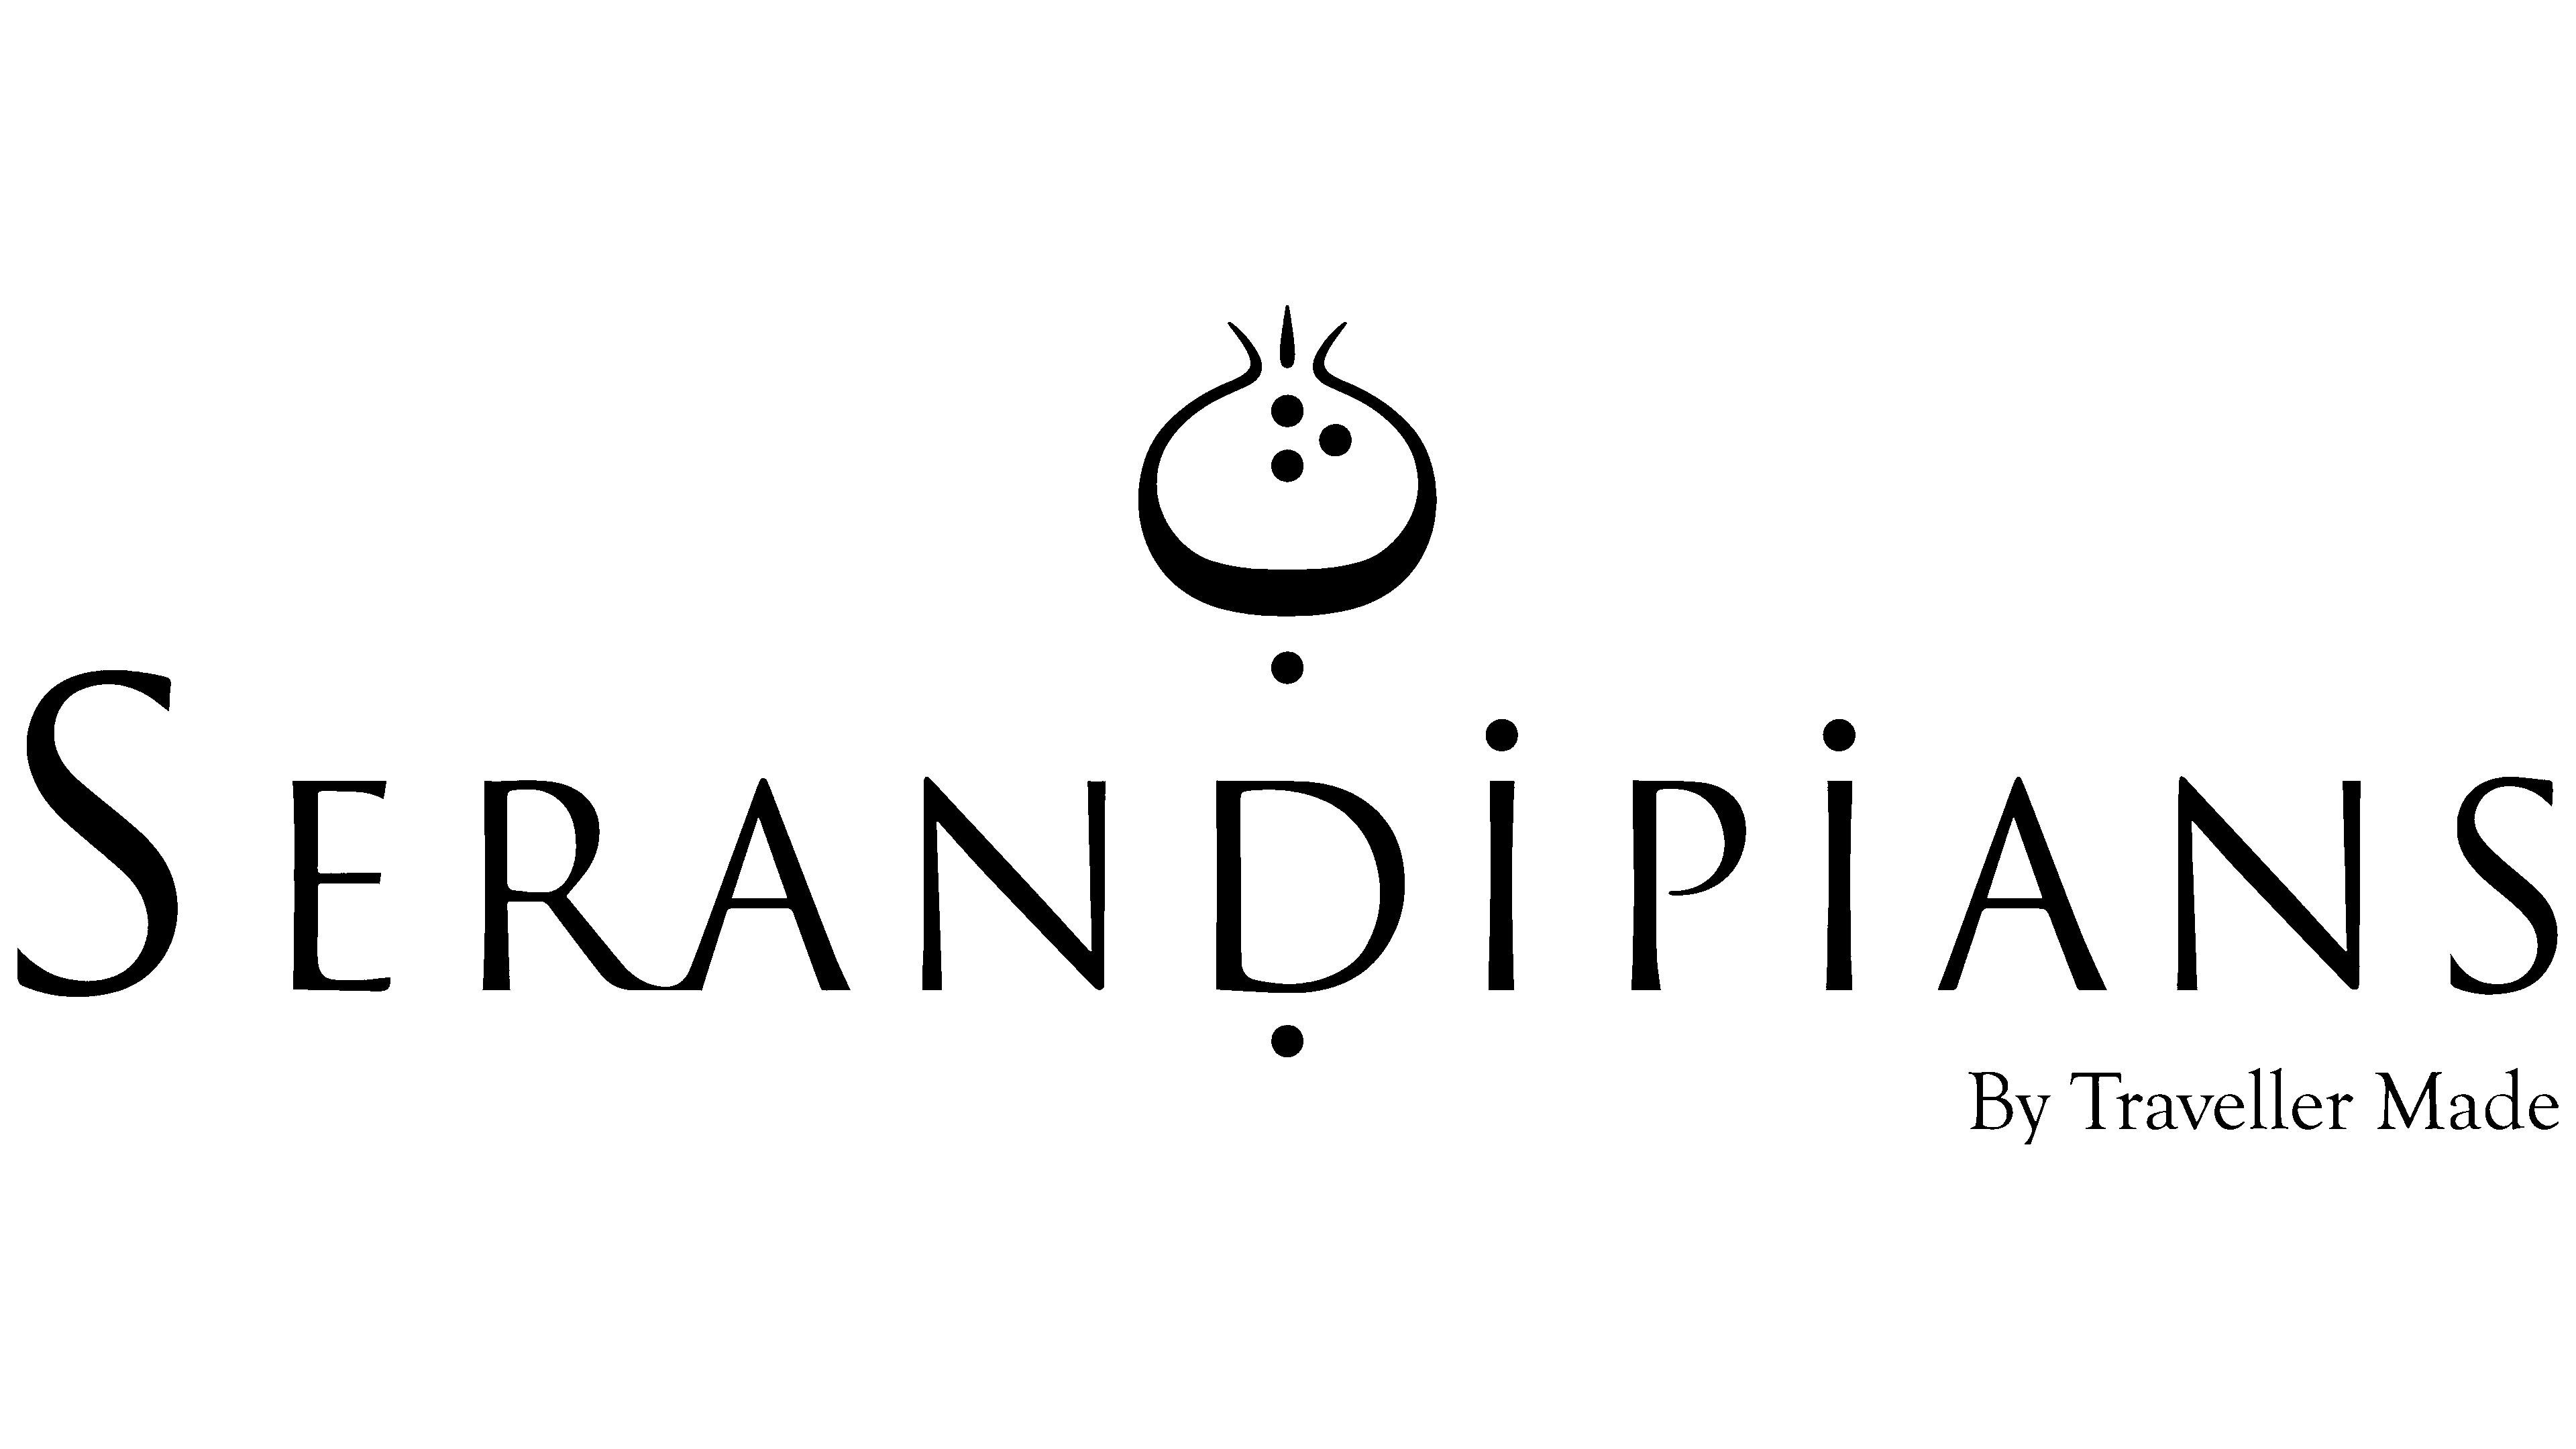 Serandipians: rebranding amid a pandemic